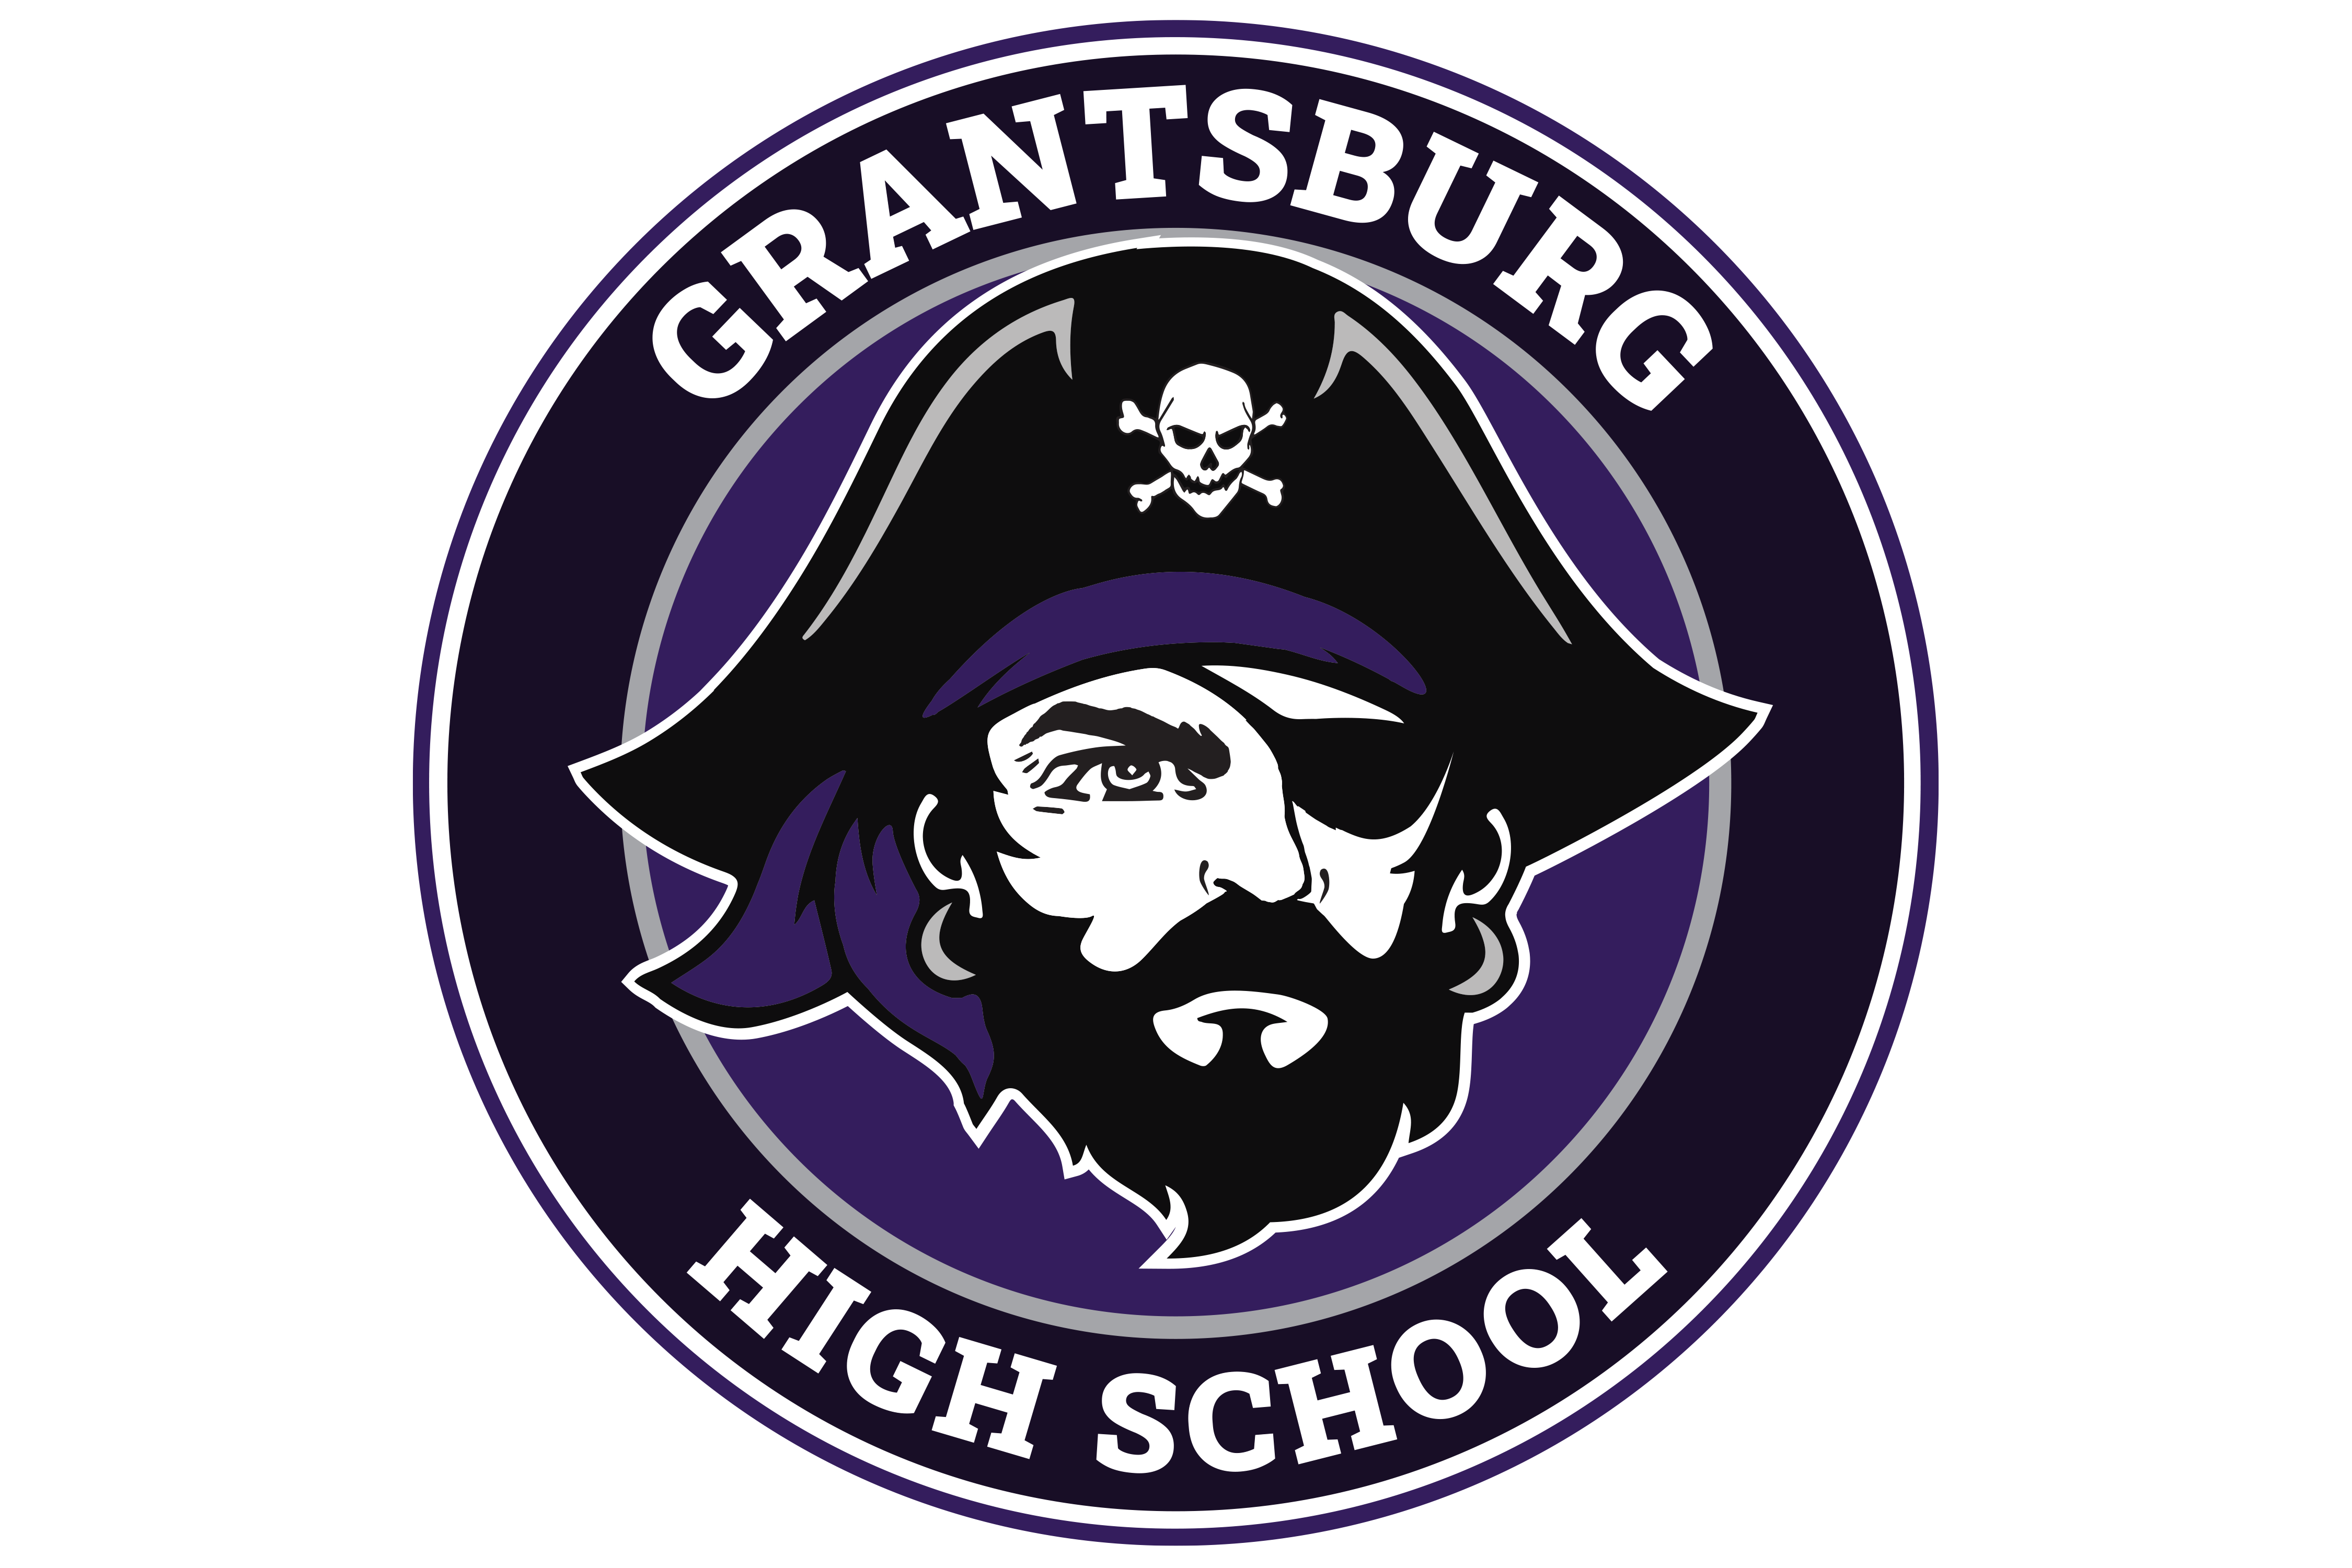 Grantsburg High School